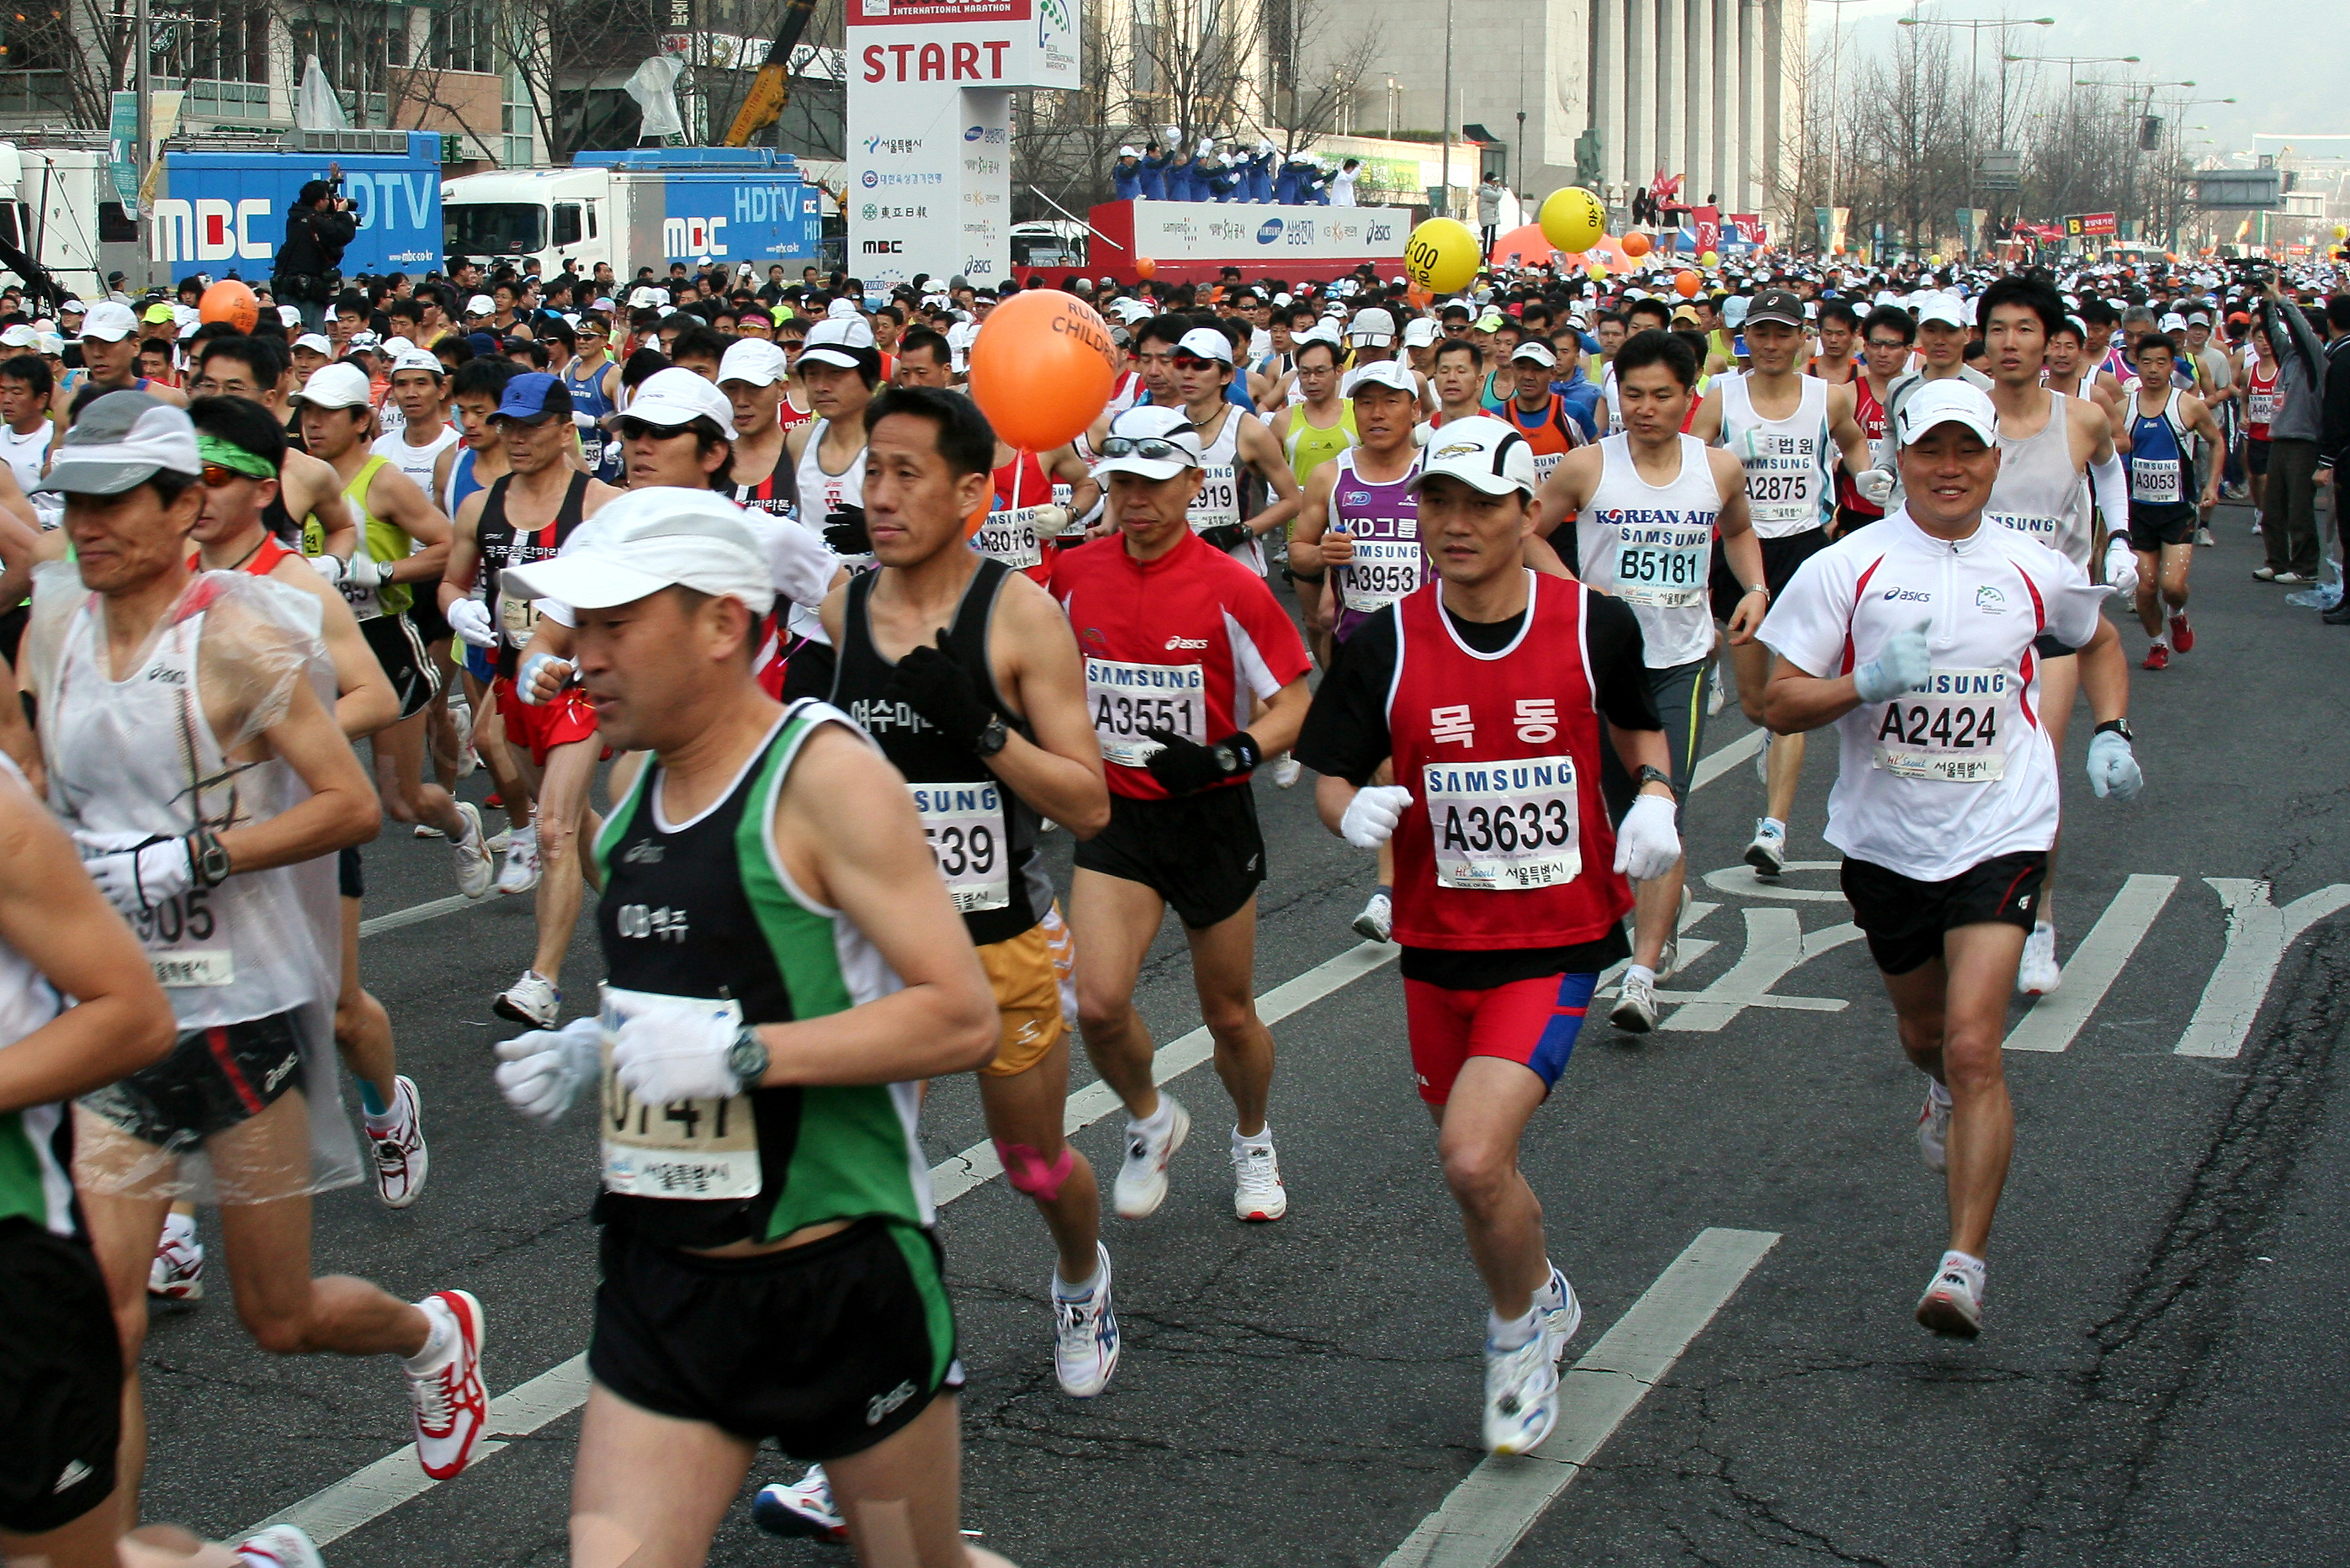 Seoul International Marathon